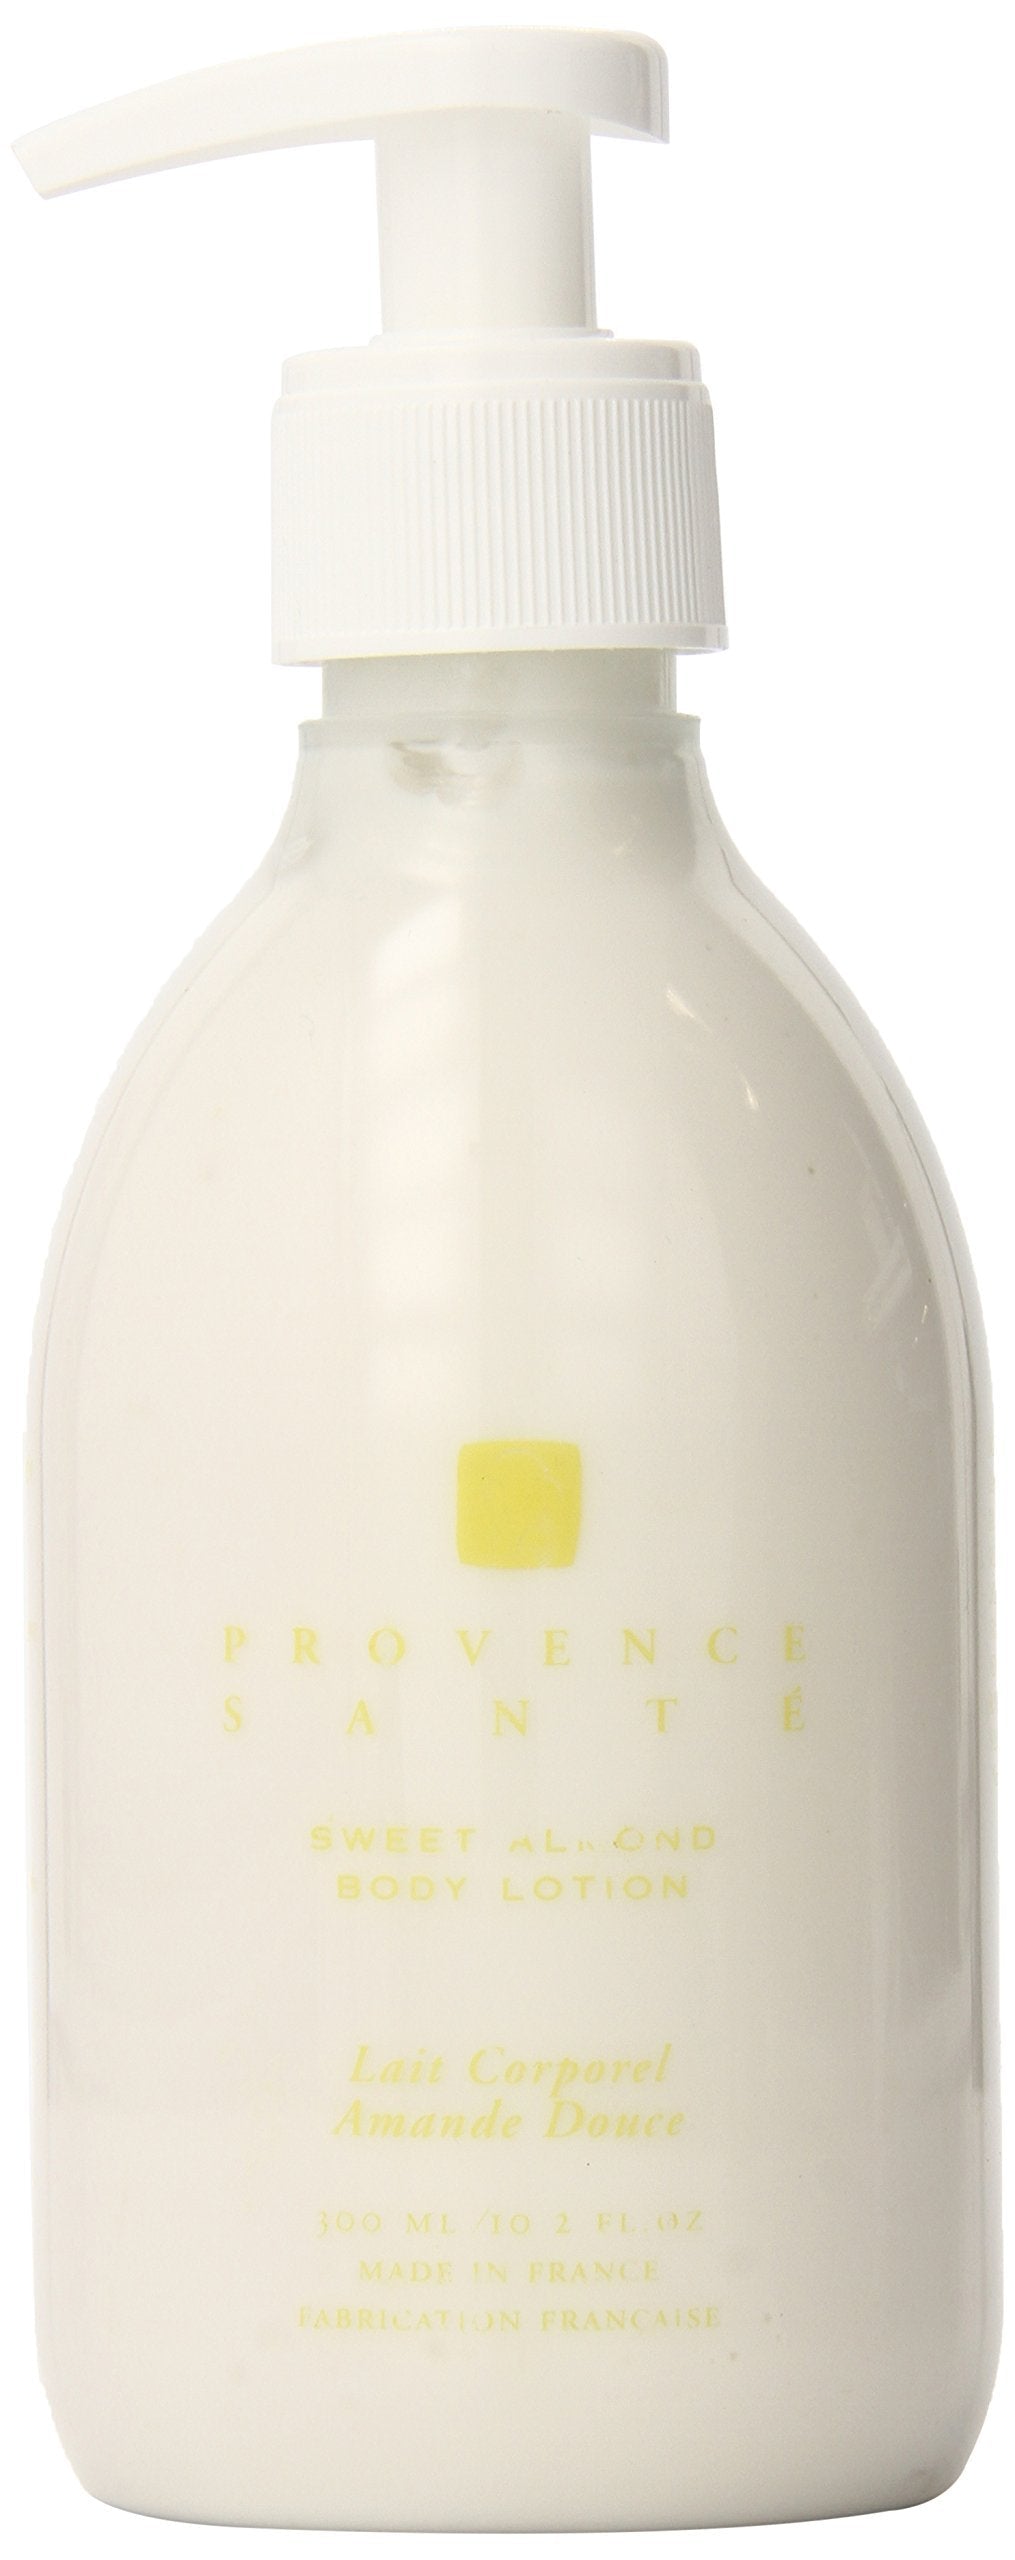 Provence Sante PS Body Lotion Sweet Almond, 10.2oz Bottle - BeesActive Australia